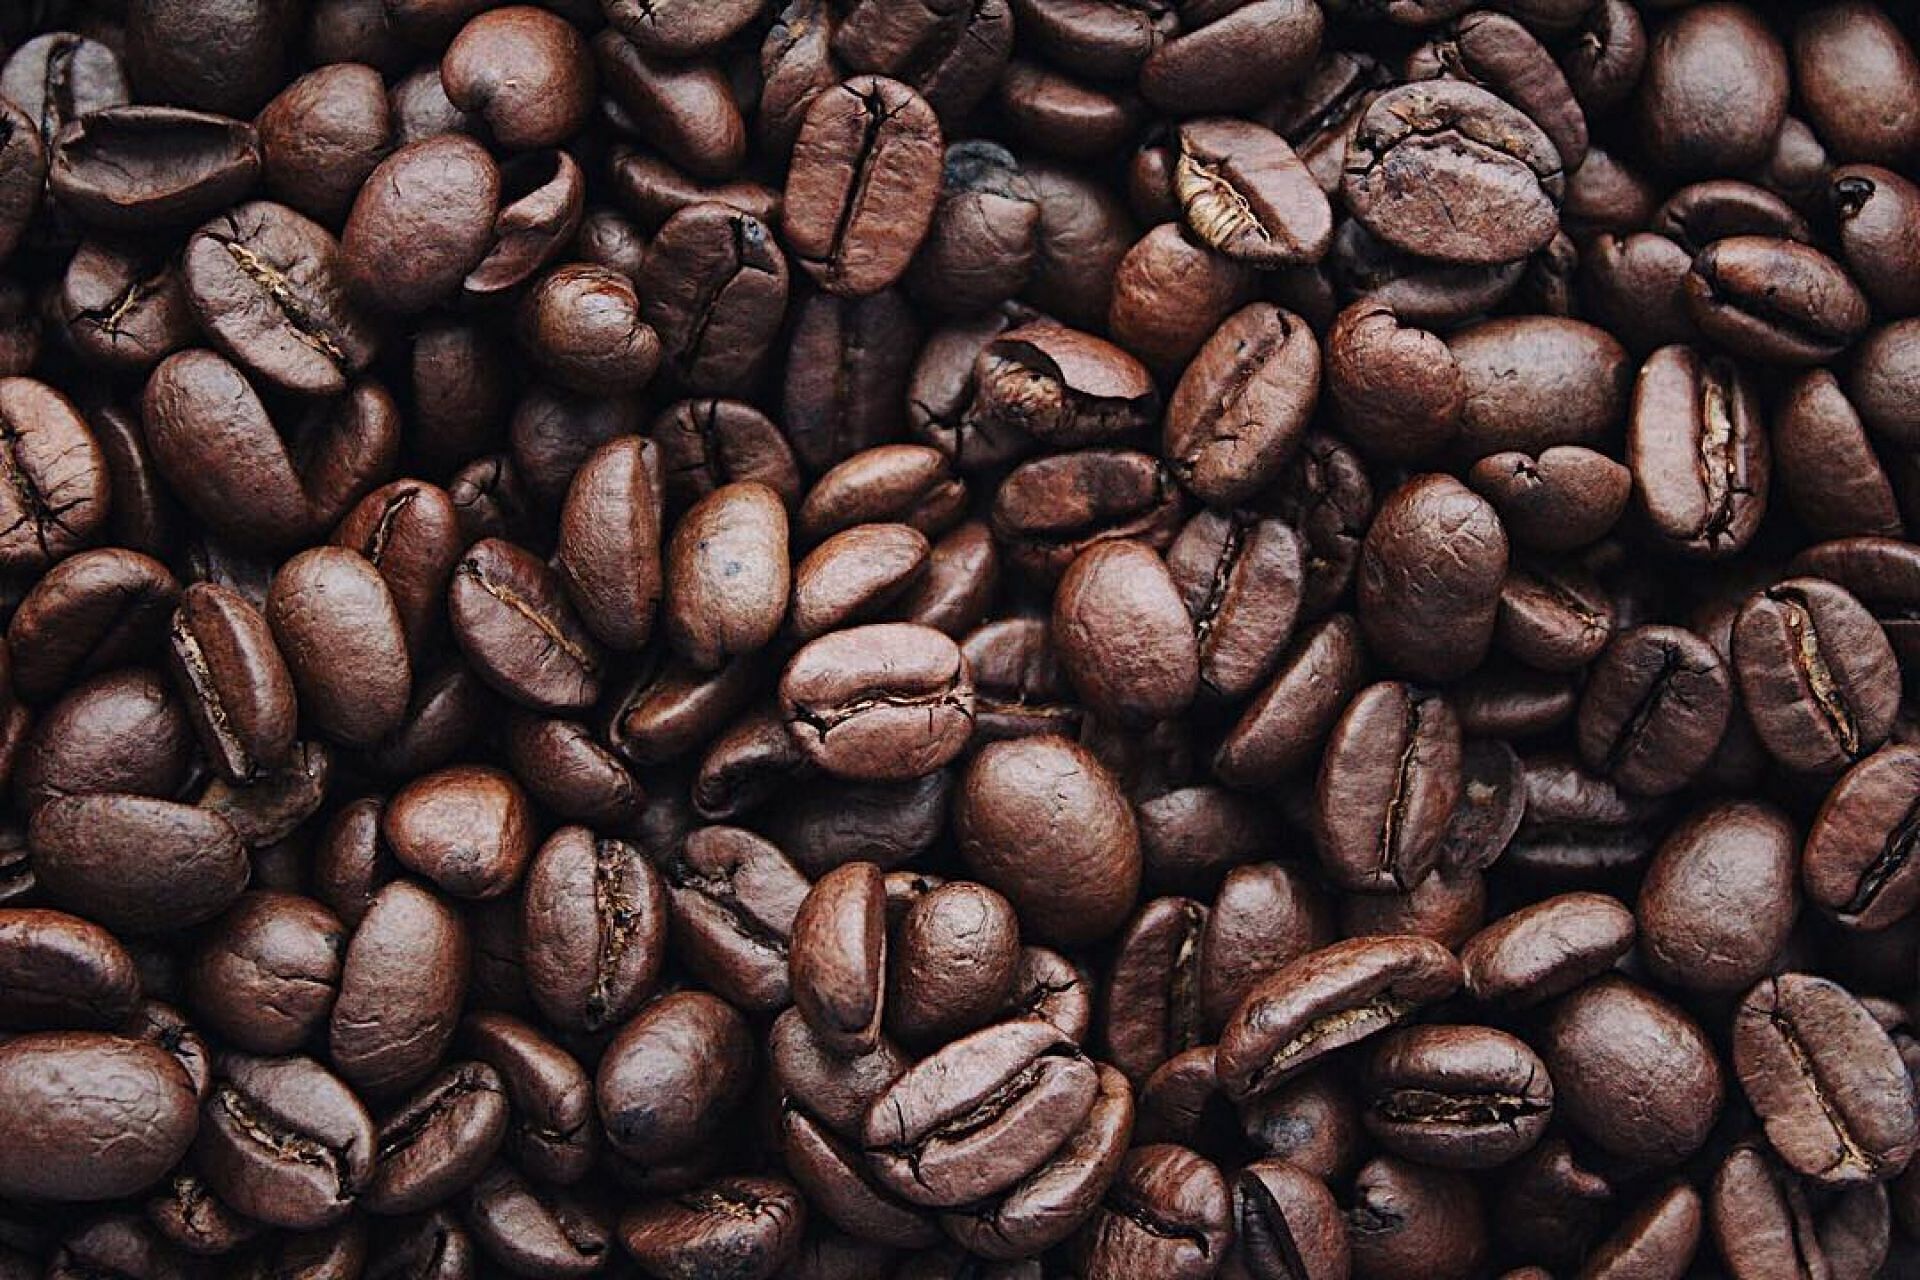 Coffee can improve brain function and mood. (Image via Pexels/ Igor Haritanovich)